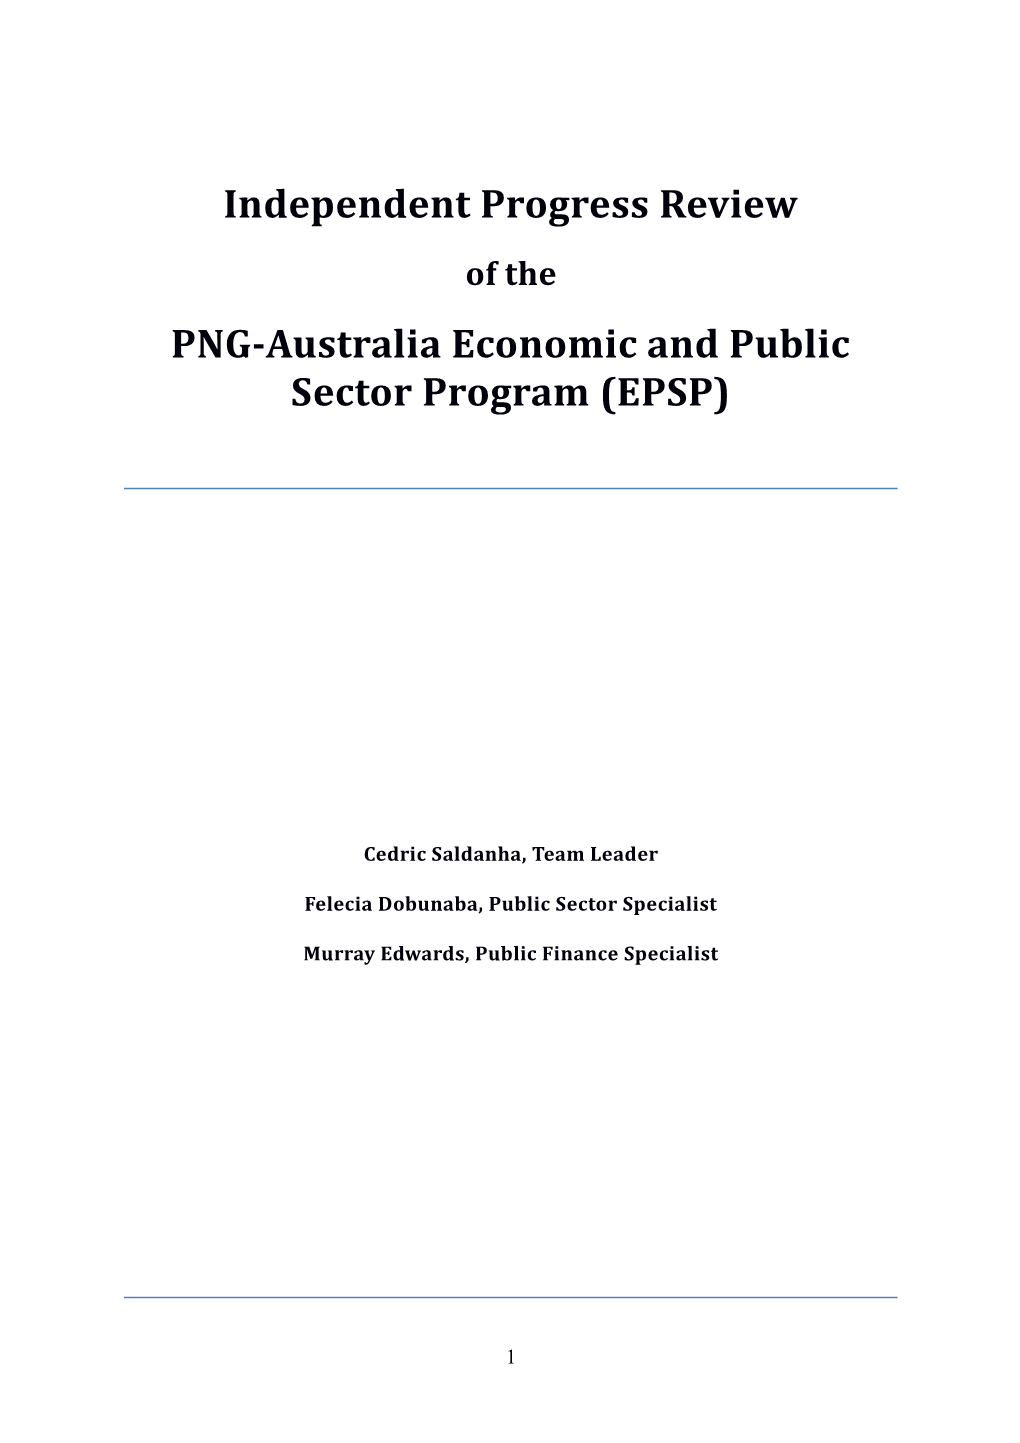 Independent Progress Review PNG-Australia EPSP, 16 October 2012